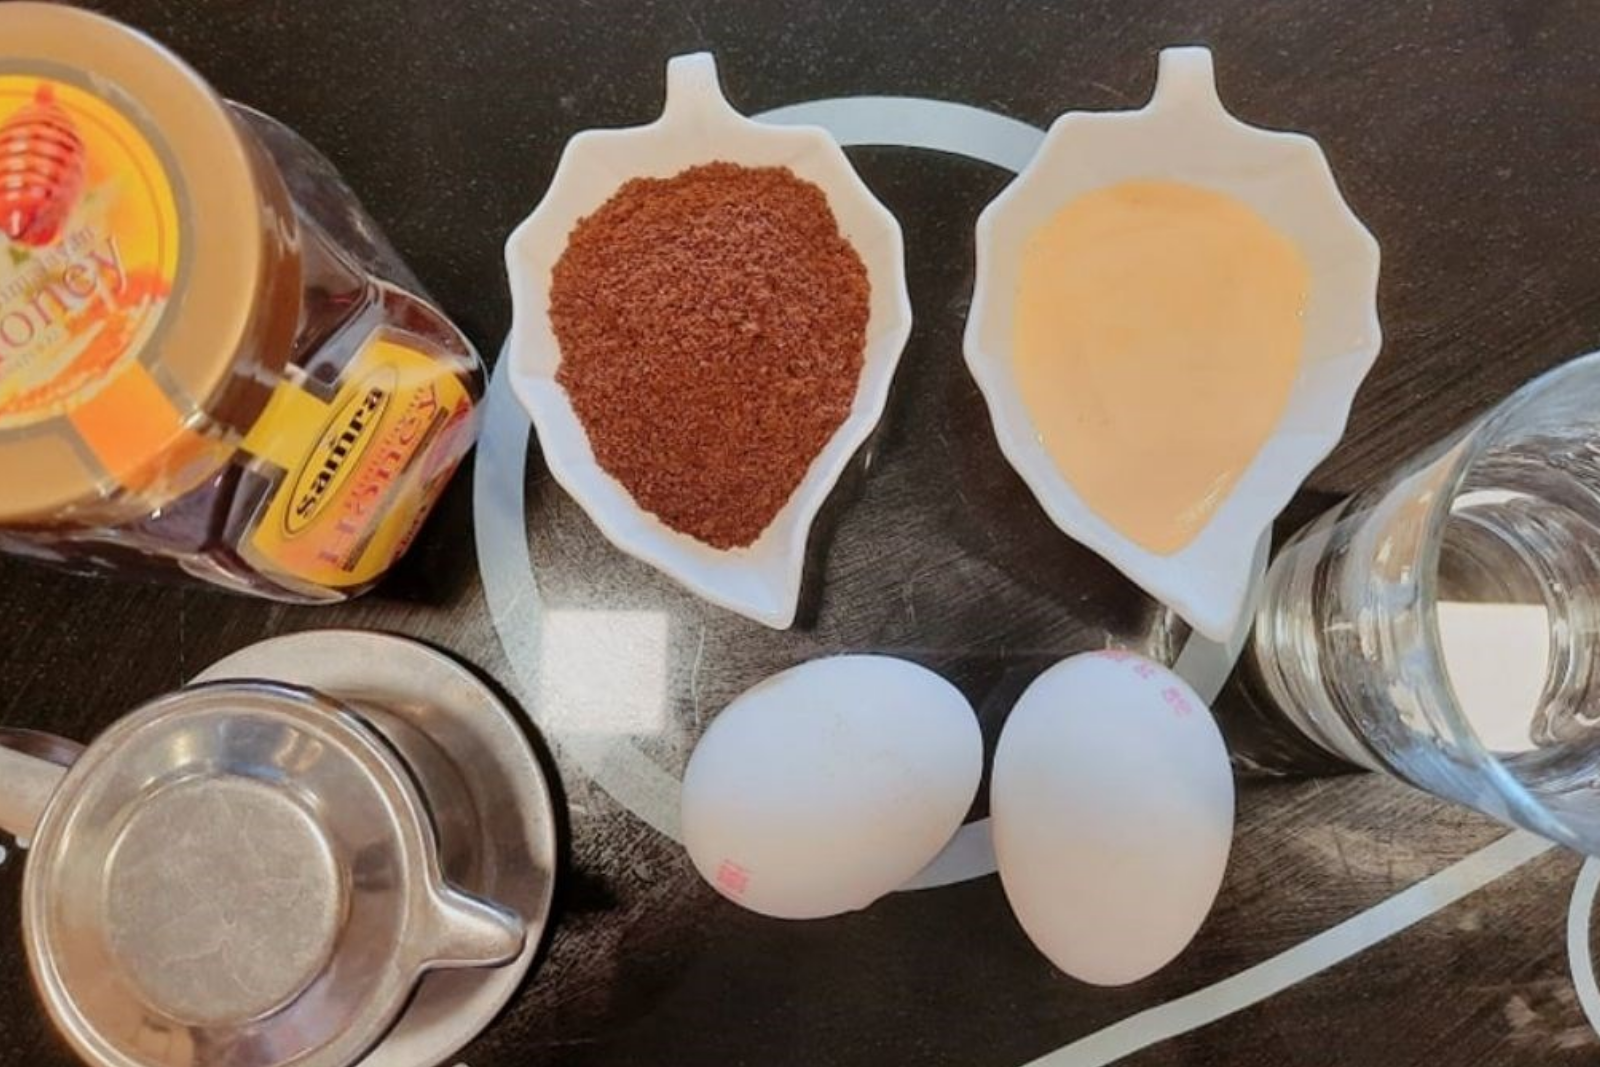 How to make Vietnamese egg coffee?